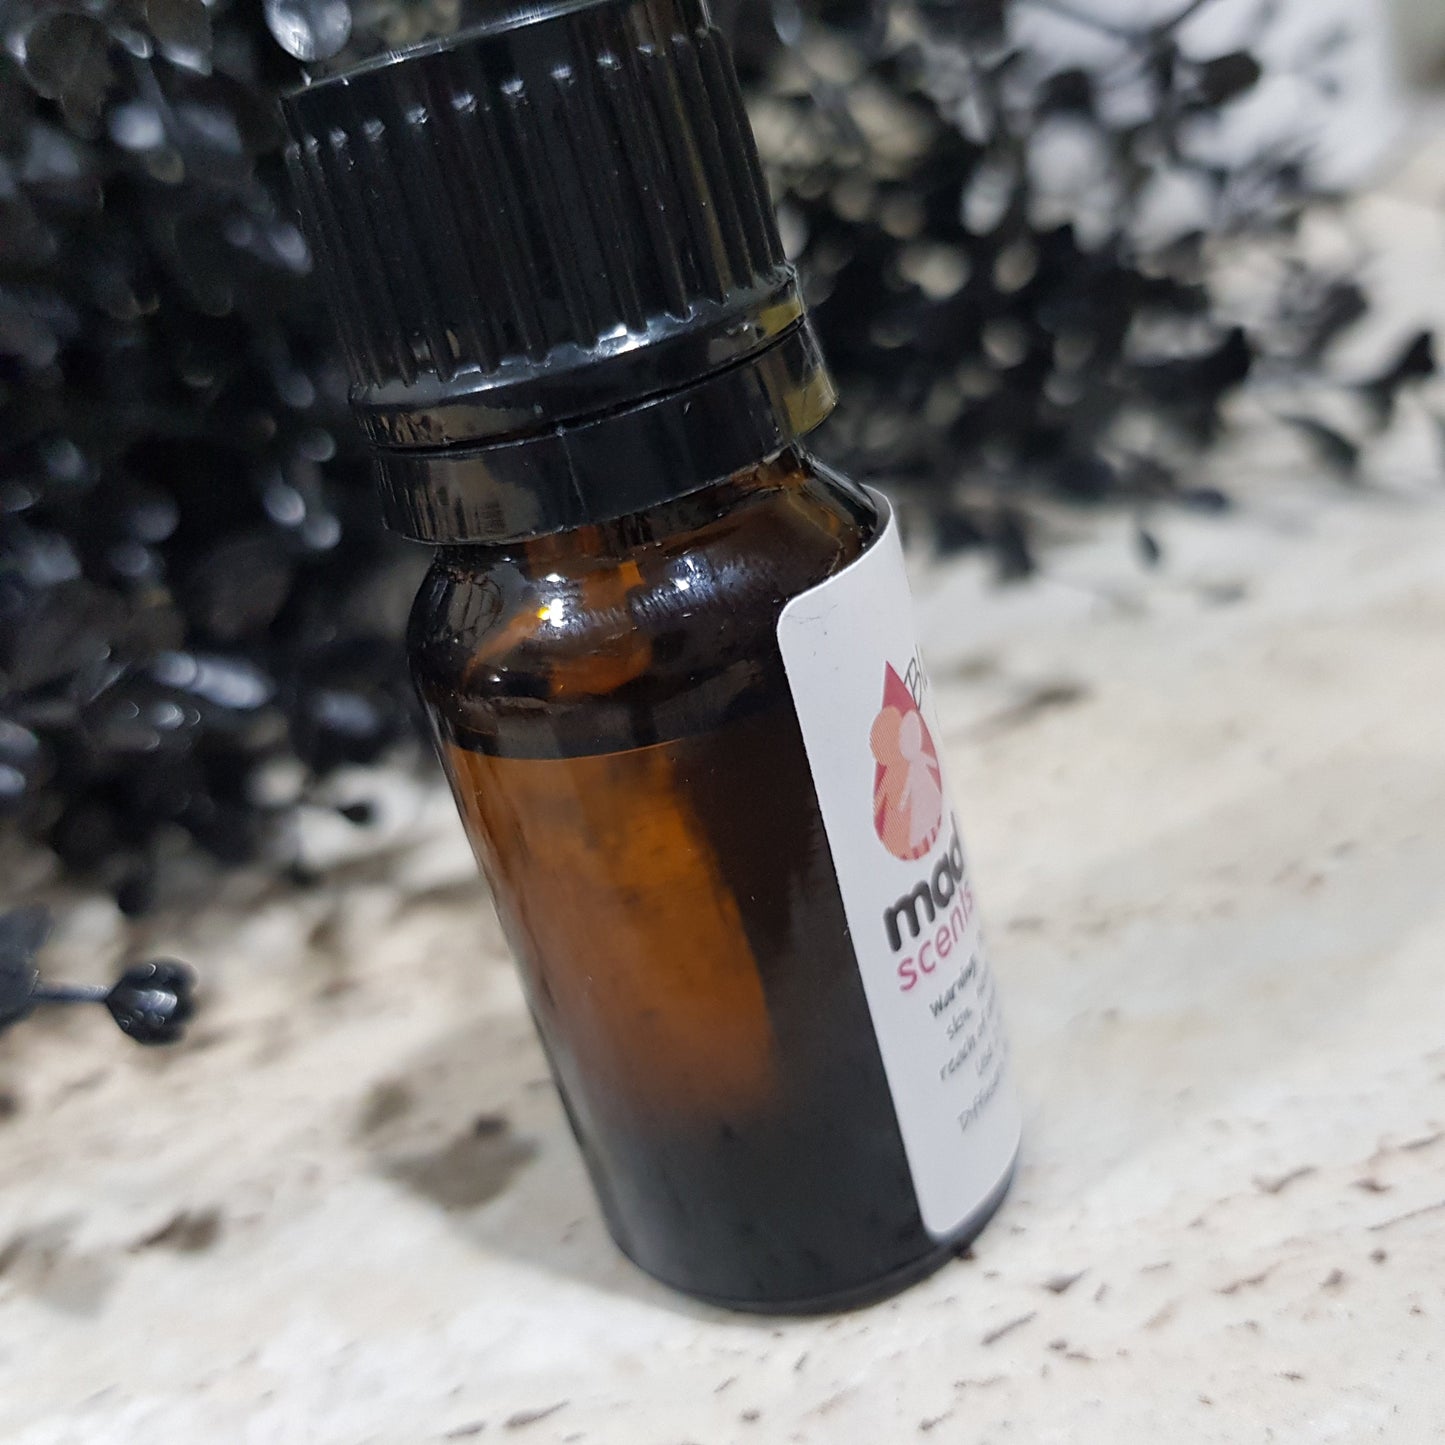 Christmas Thyme - 10ml Fragrance Oil